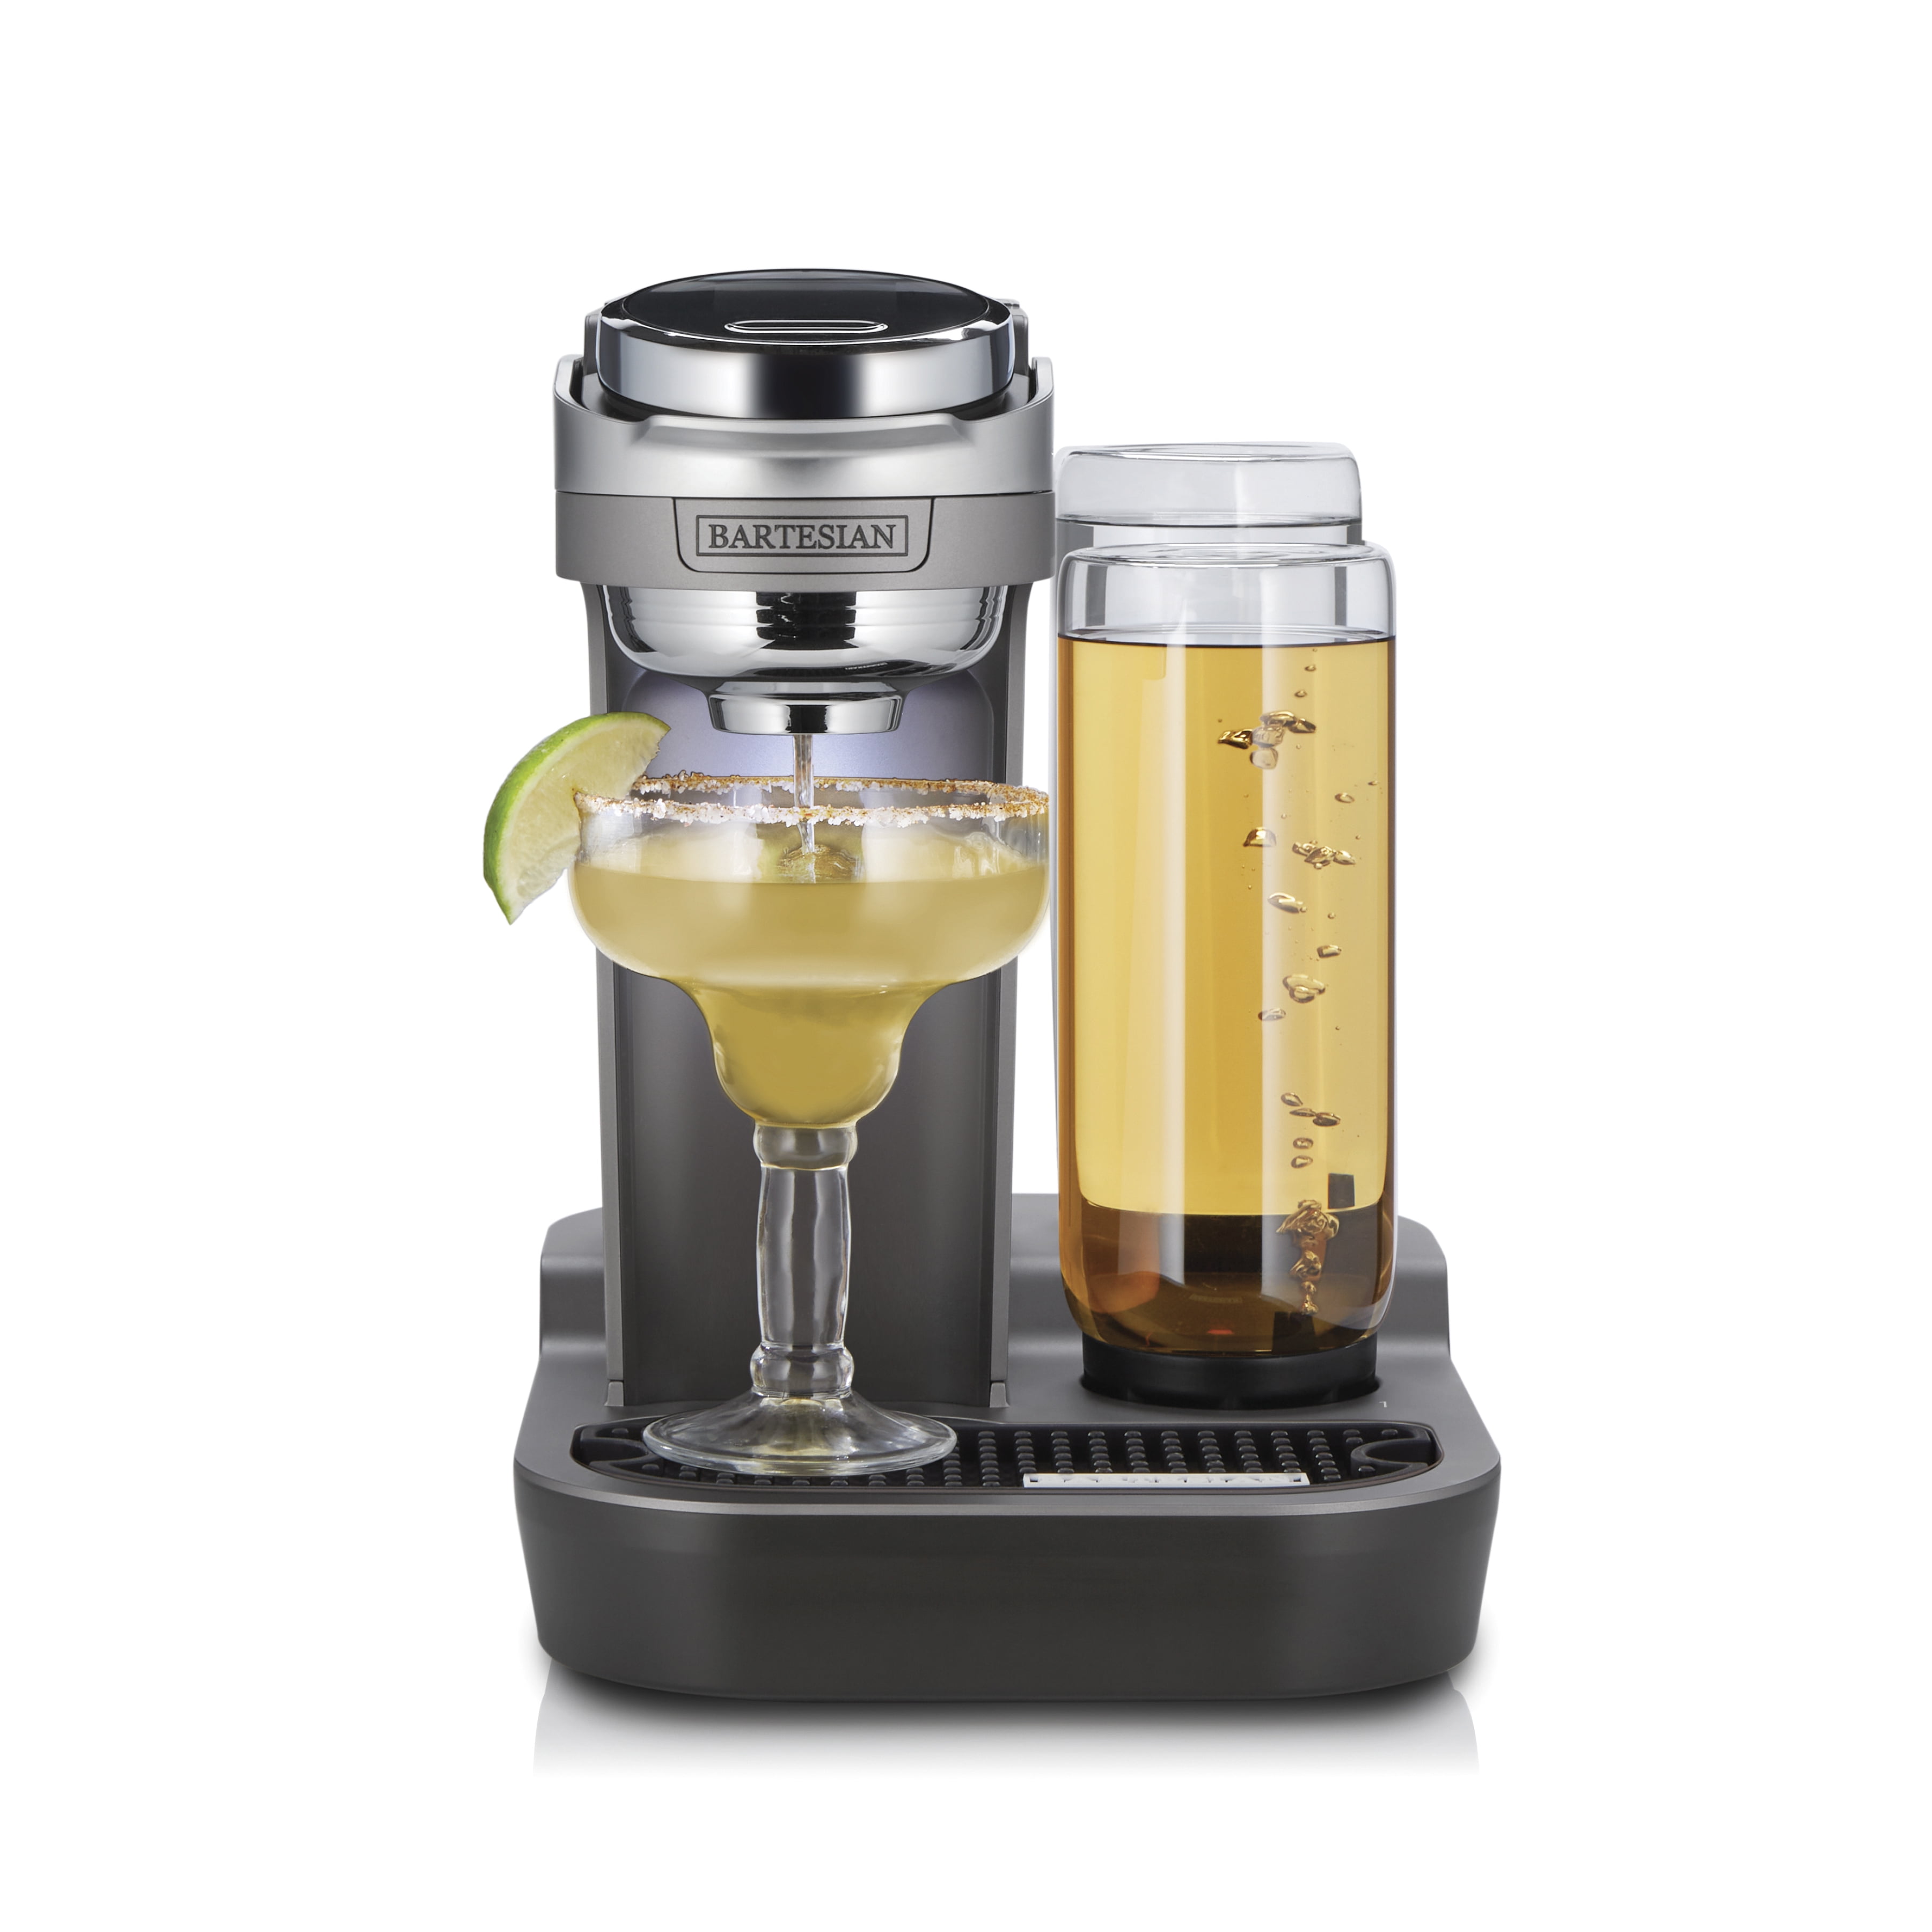 Hot Item – Bartesian Duet Premium Cocktail Machine for the Home Bar, 2 Glass Spirit Bottles